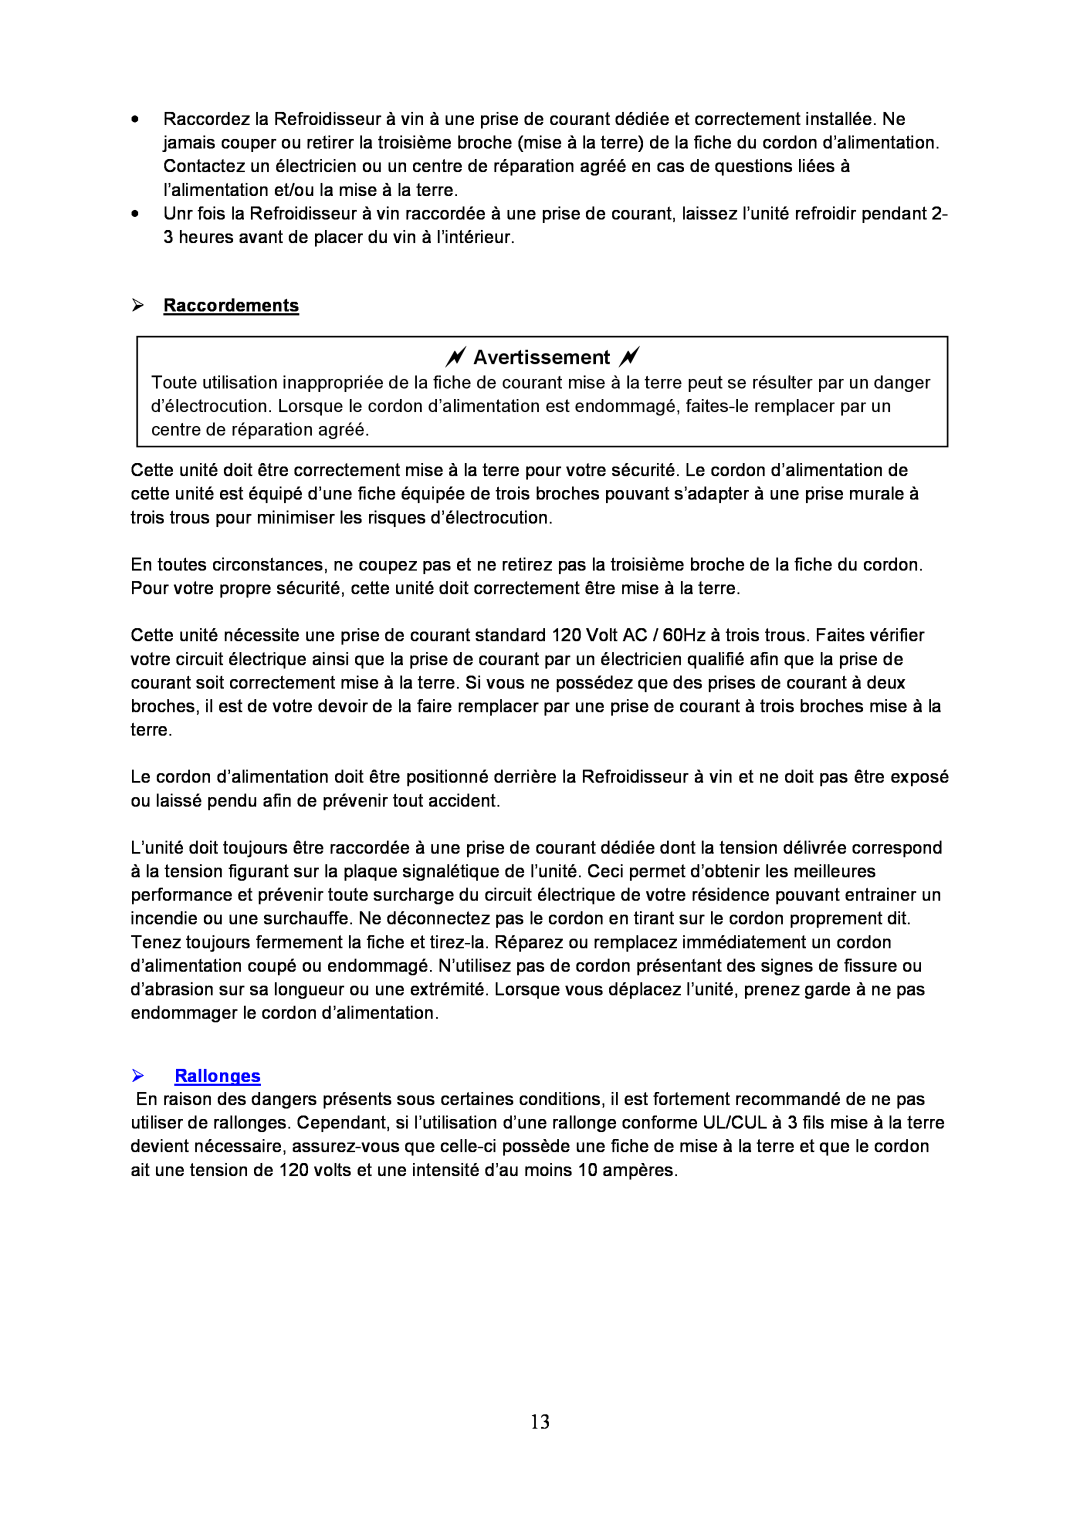 Igloo FRW154C instruction manual Avertissement, Raccordements, Rallonges 